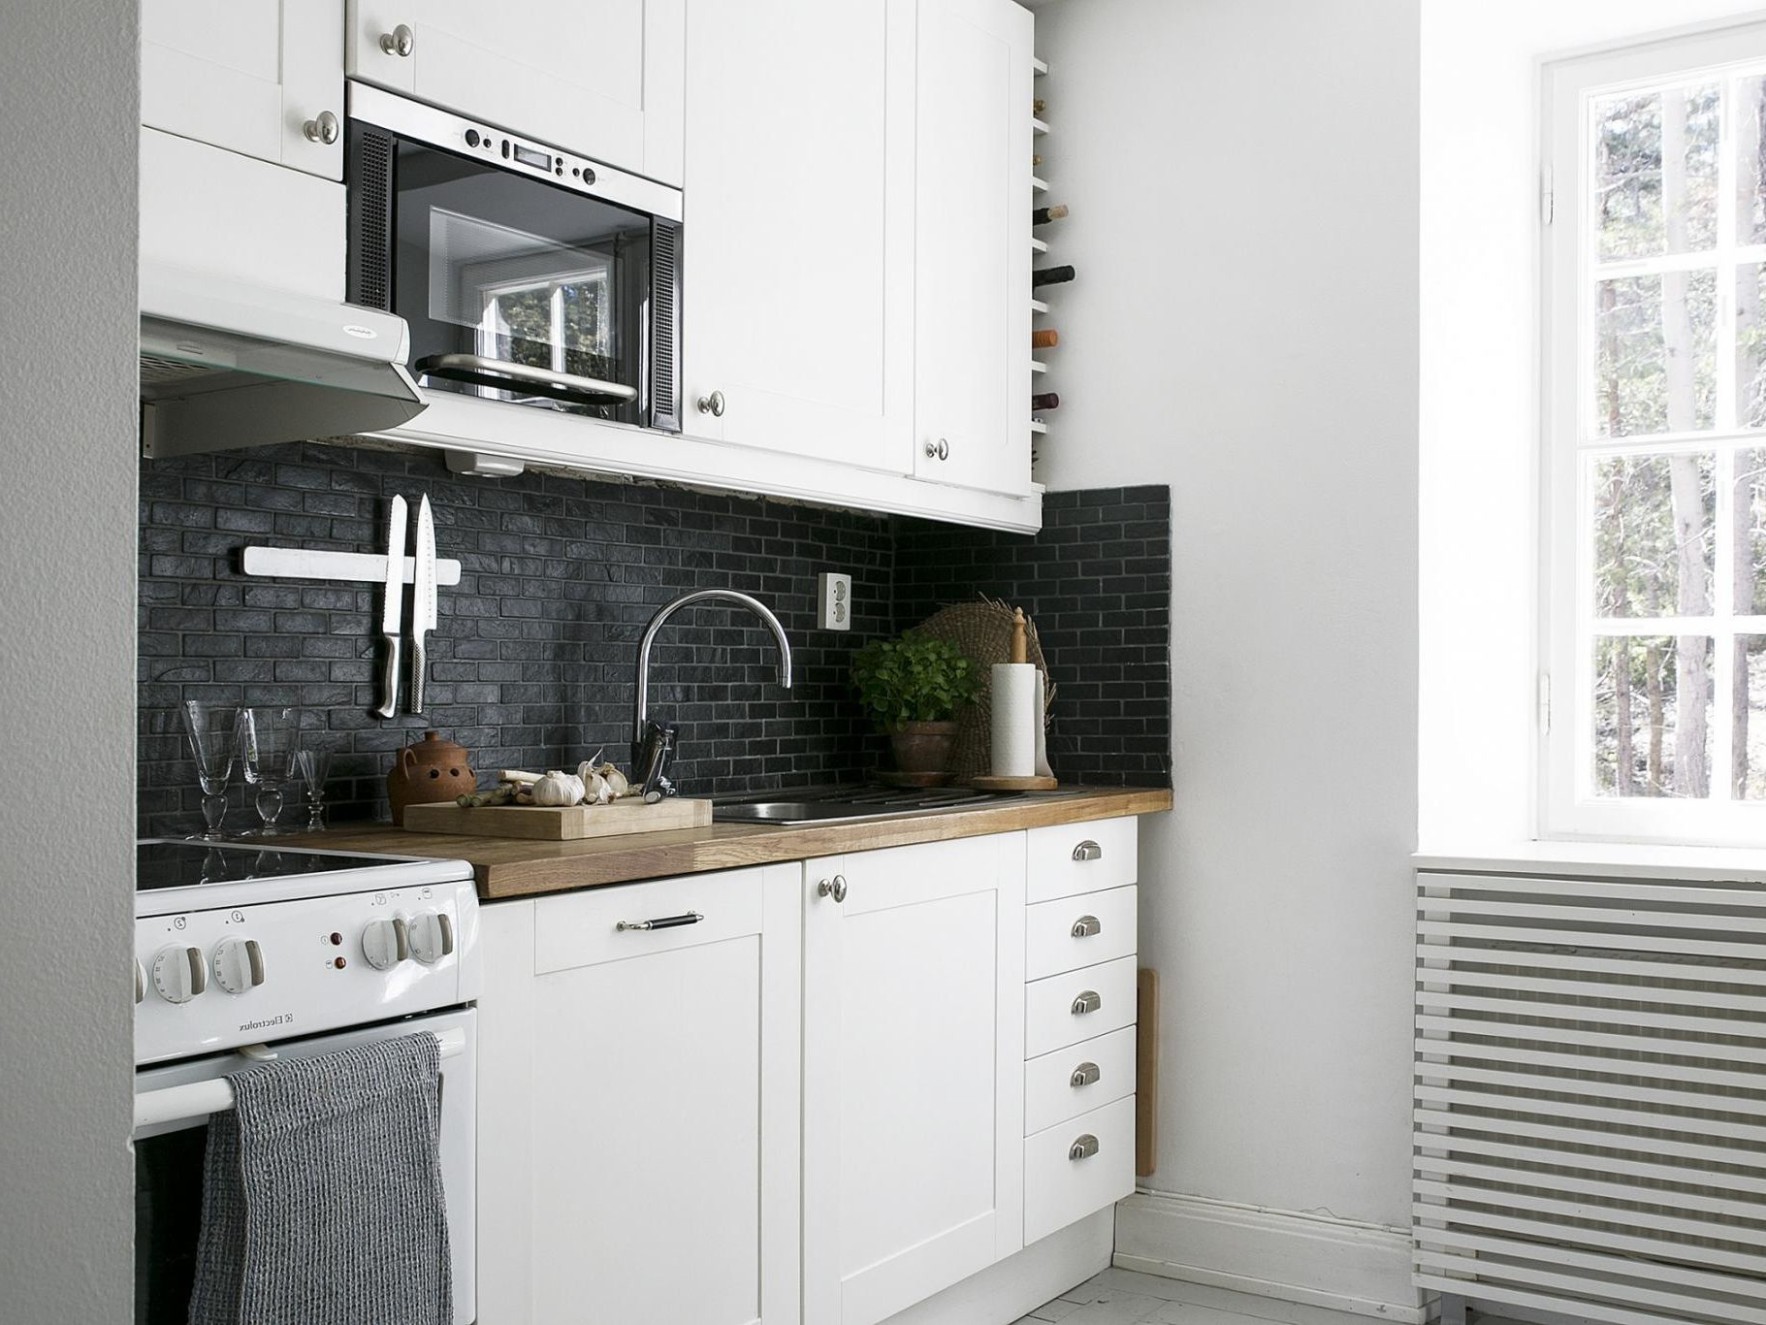 10 Beautiful Small Kitchen Ideas - small kitchen planner